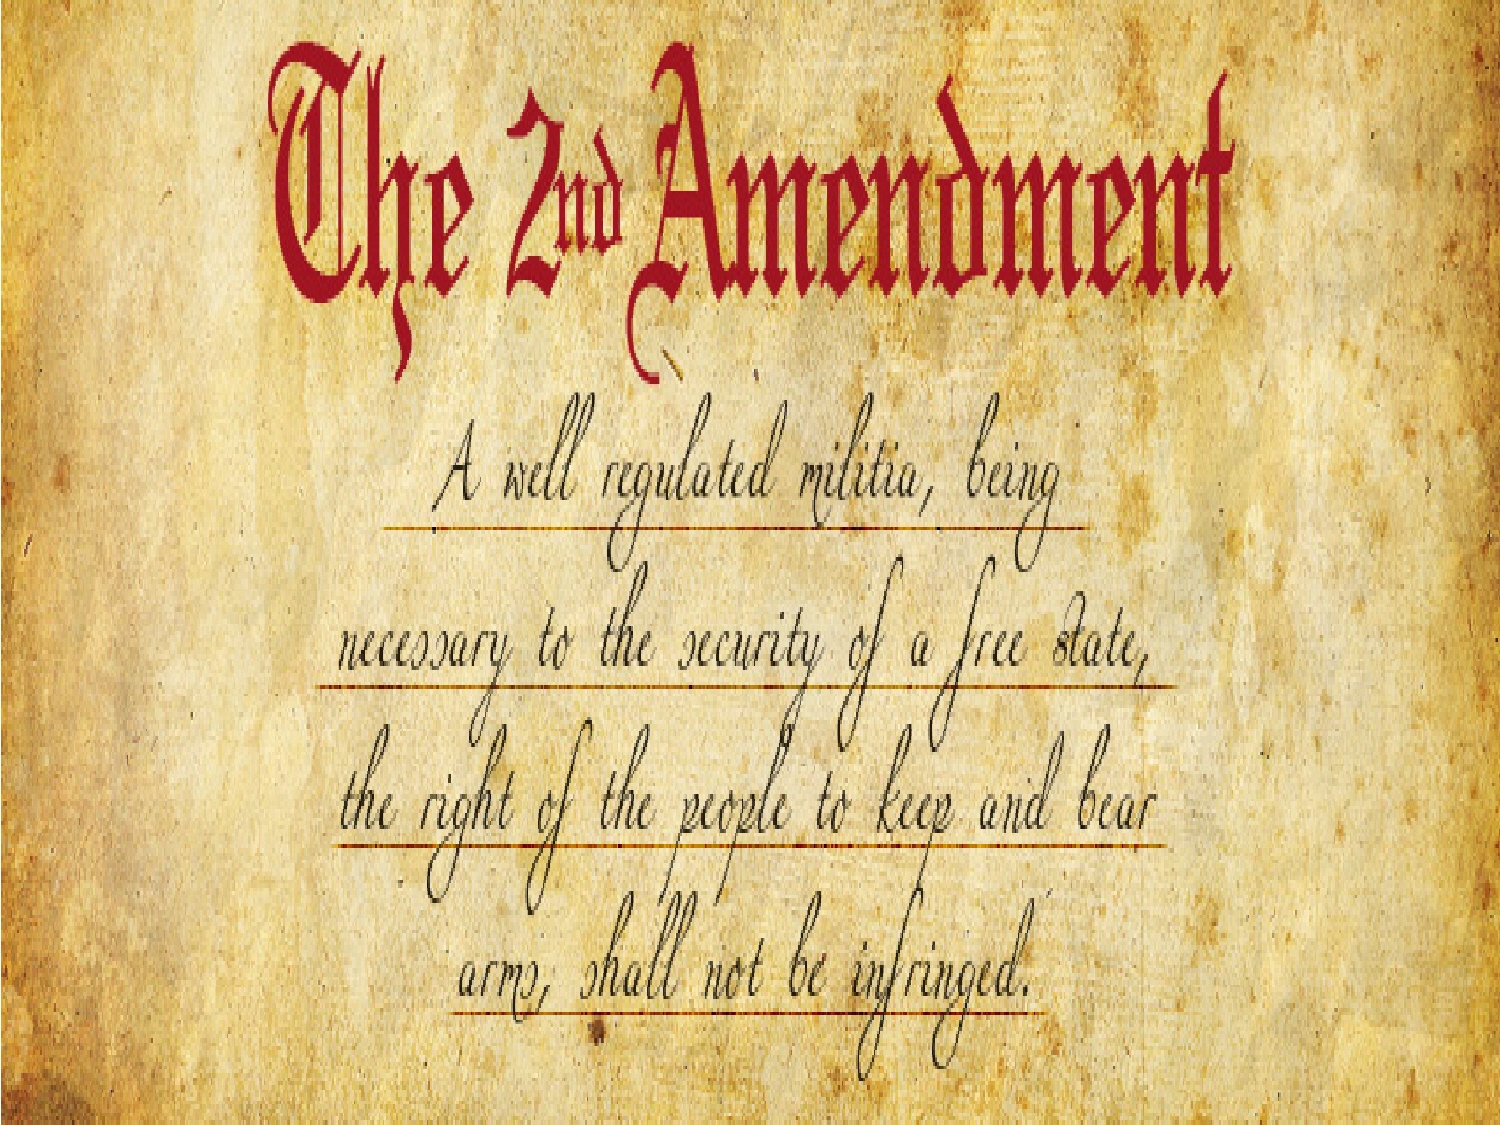 misc, 2nd amendment